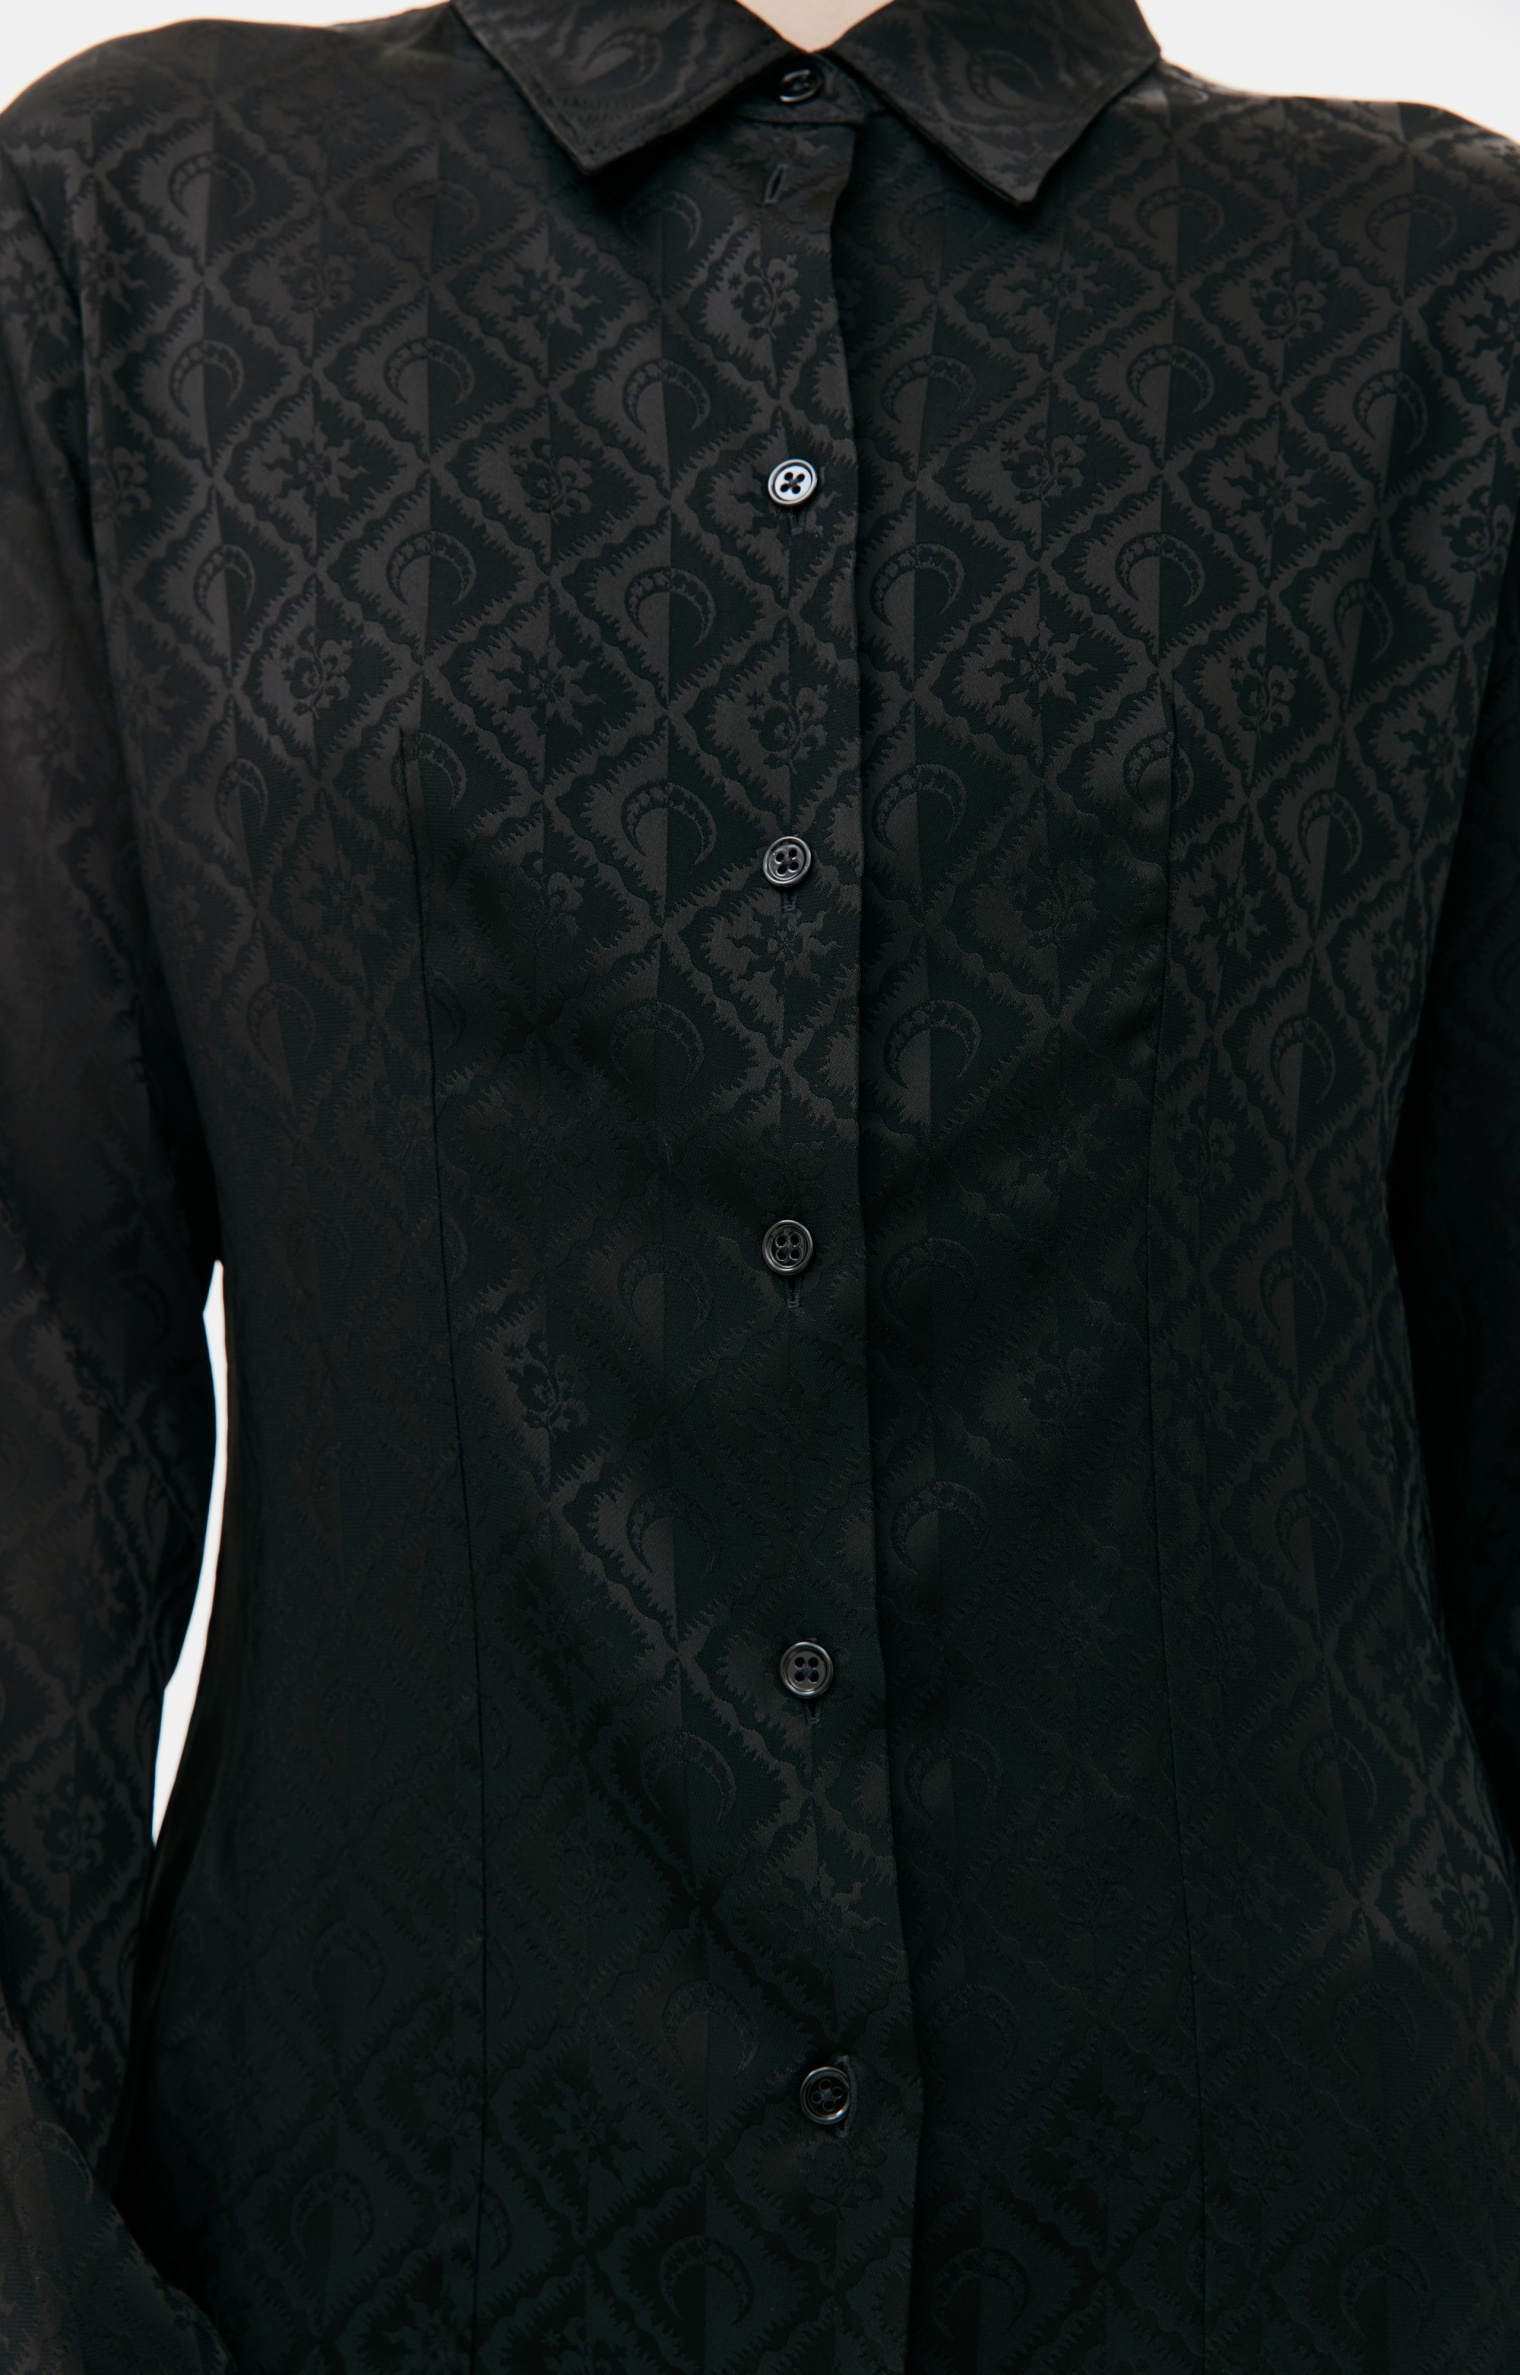 MARINE SERRE Black patterned shirt